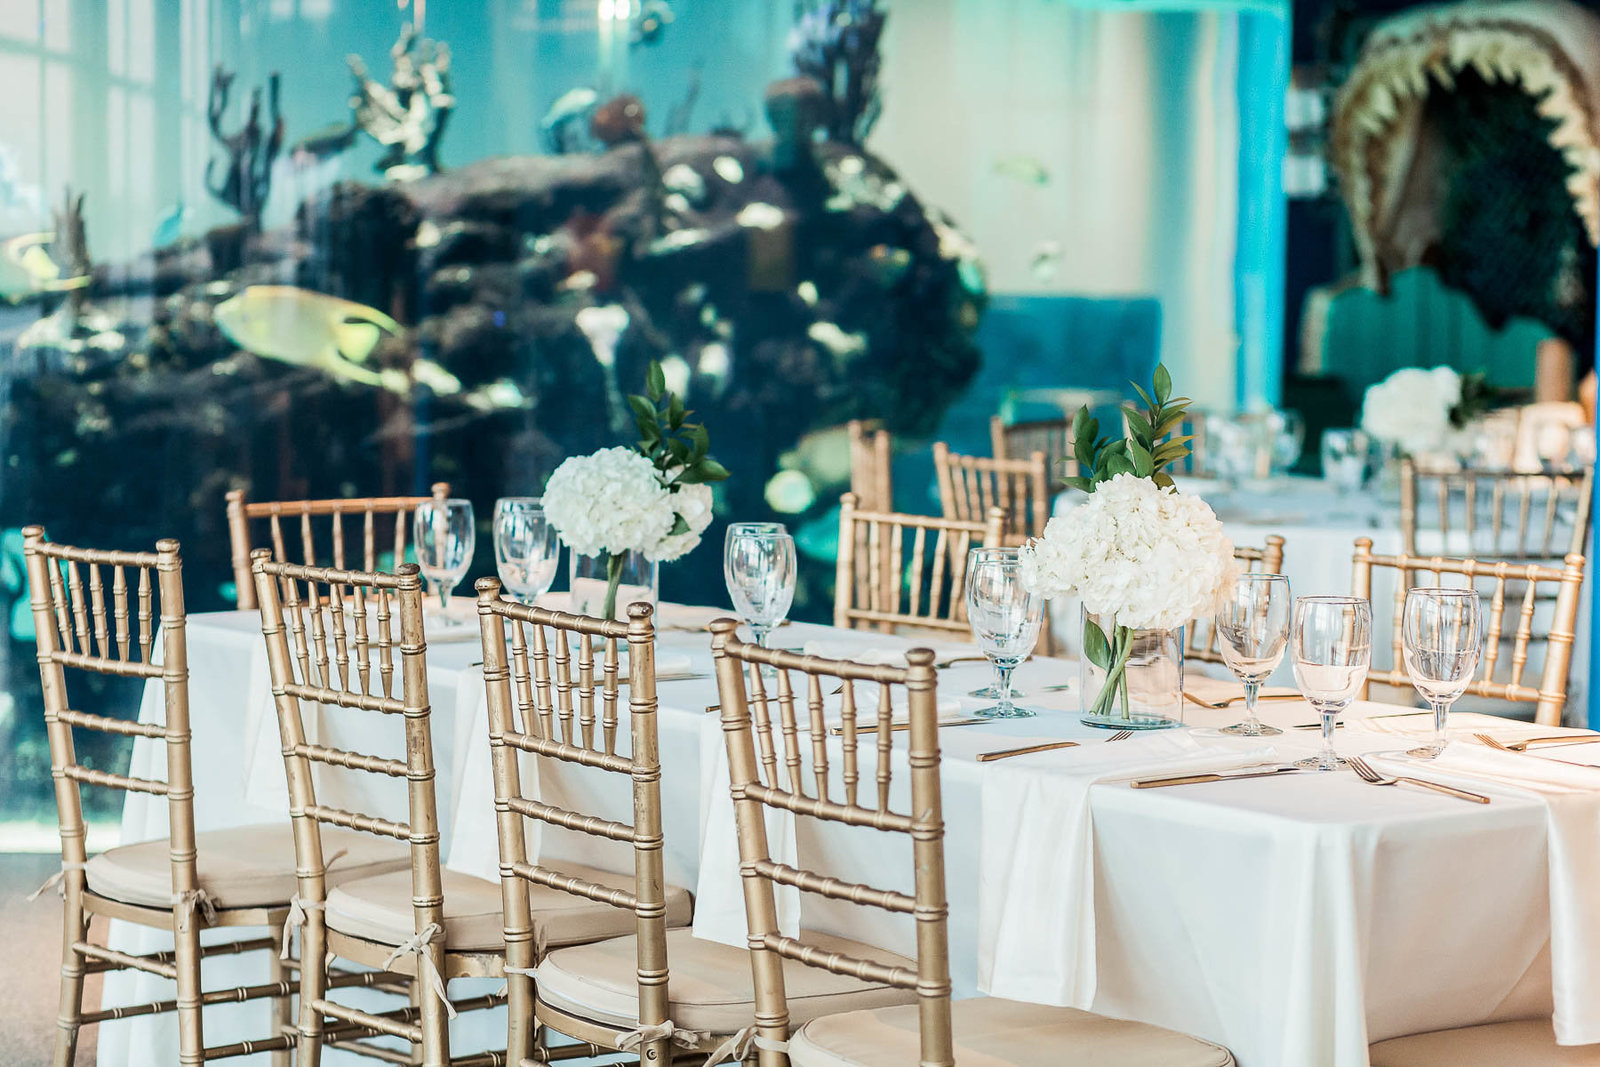 Gold and blue accents are used in reception decor, South Carolina Aquarium, Charleston, South Carolina